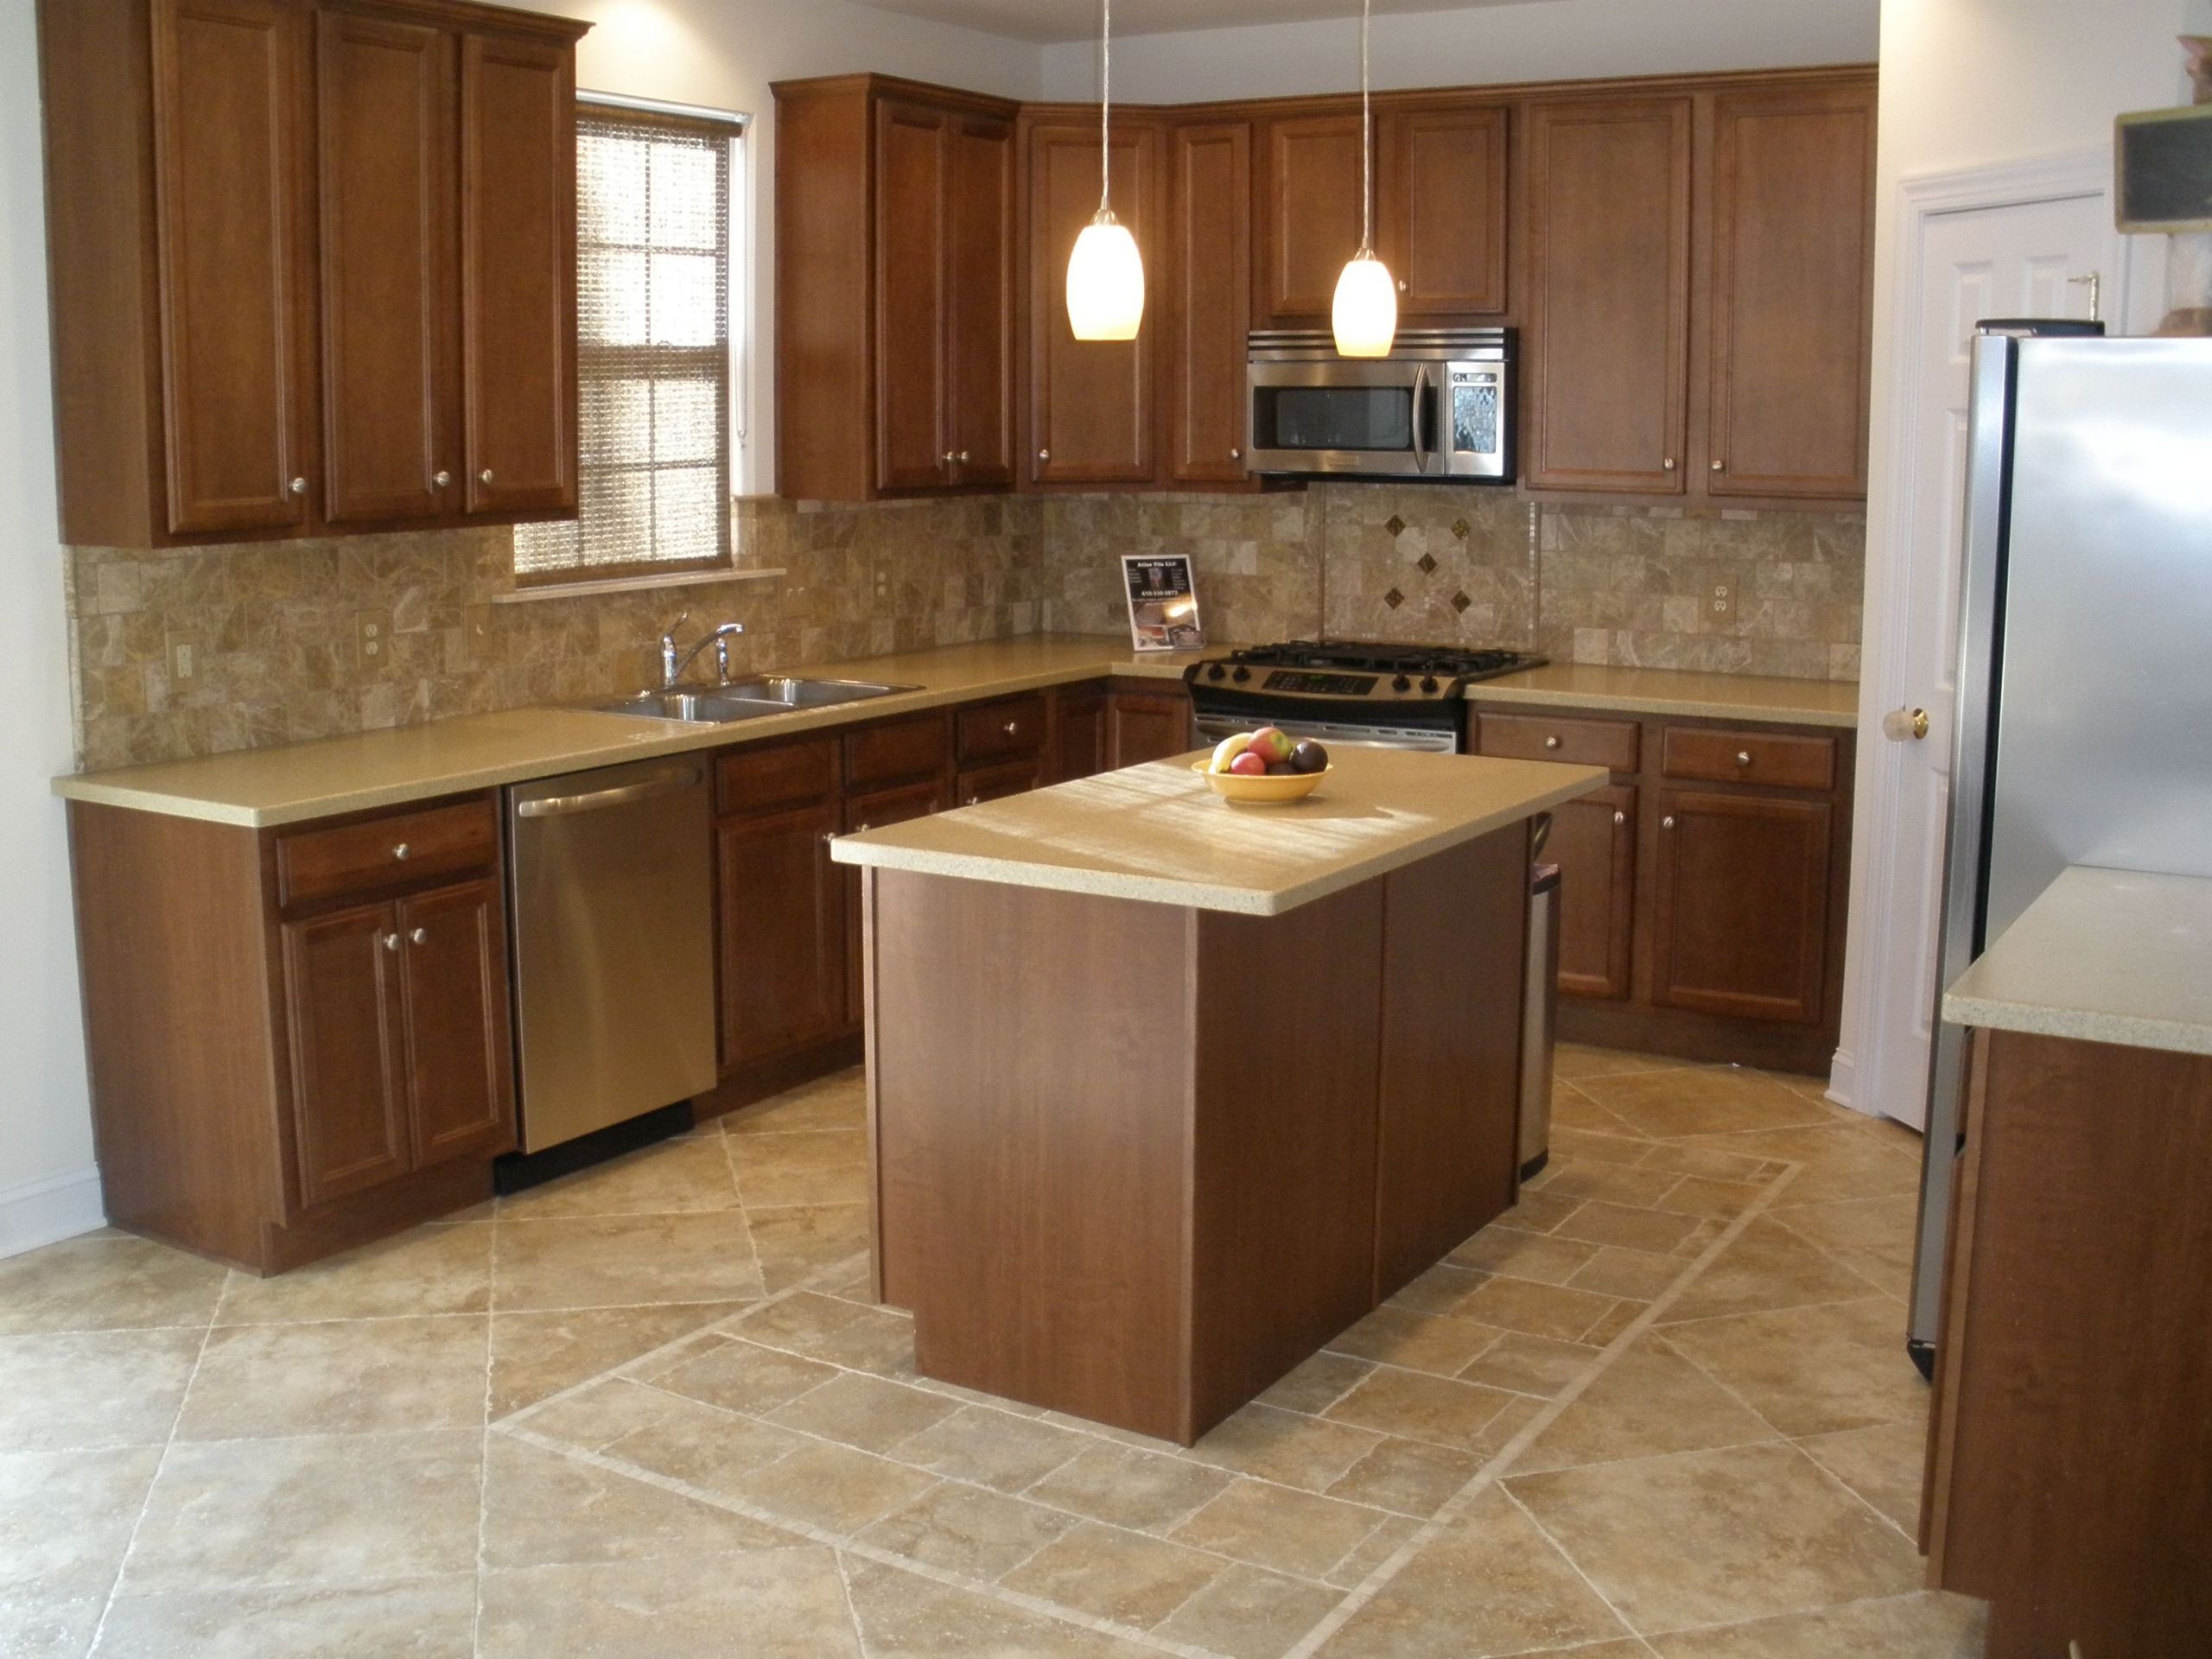 Kitchen Flooring Ceramic Tiles
 Kitchen Floor Tile Designs for a Perfect Warm Kitchen to